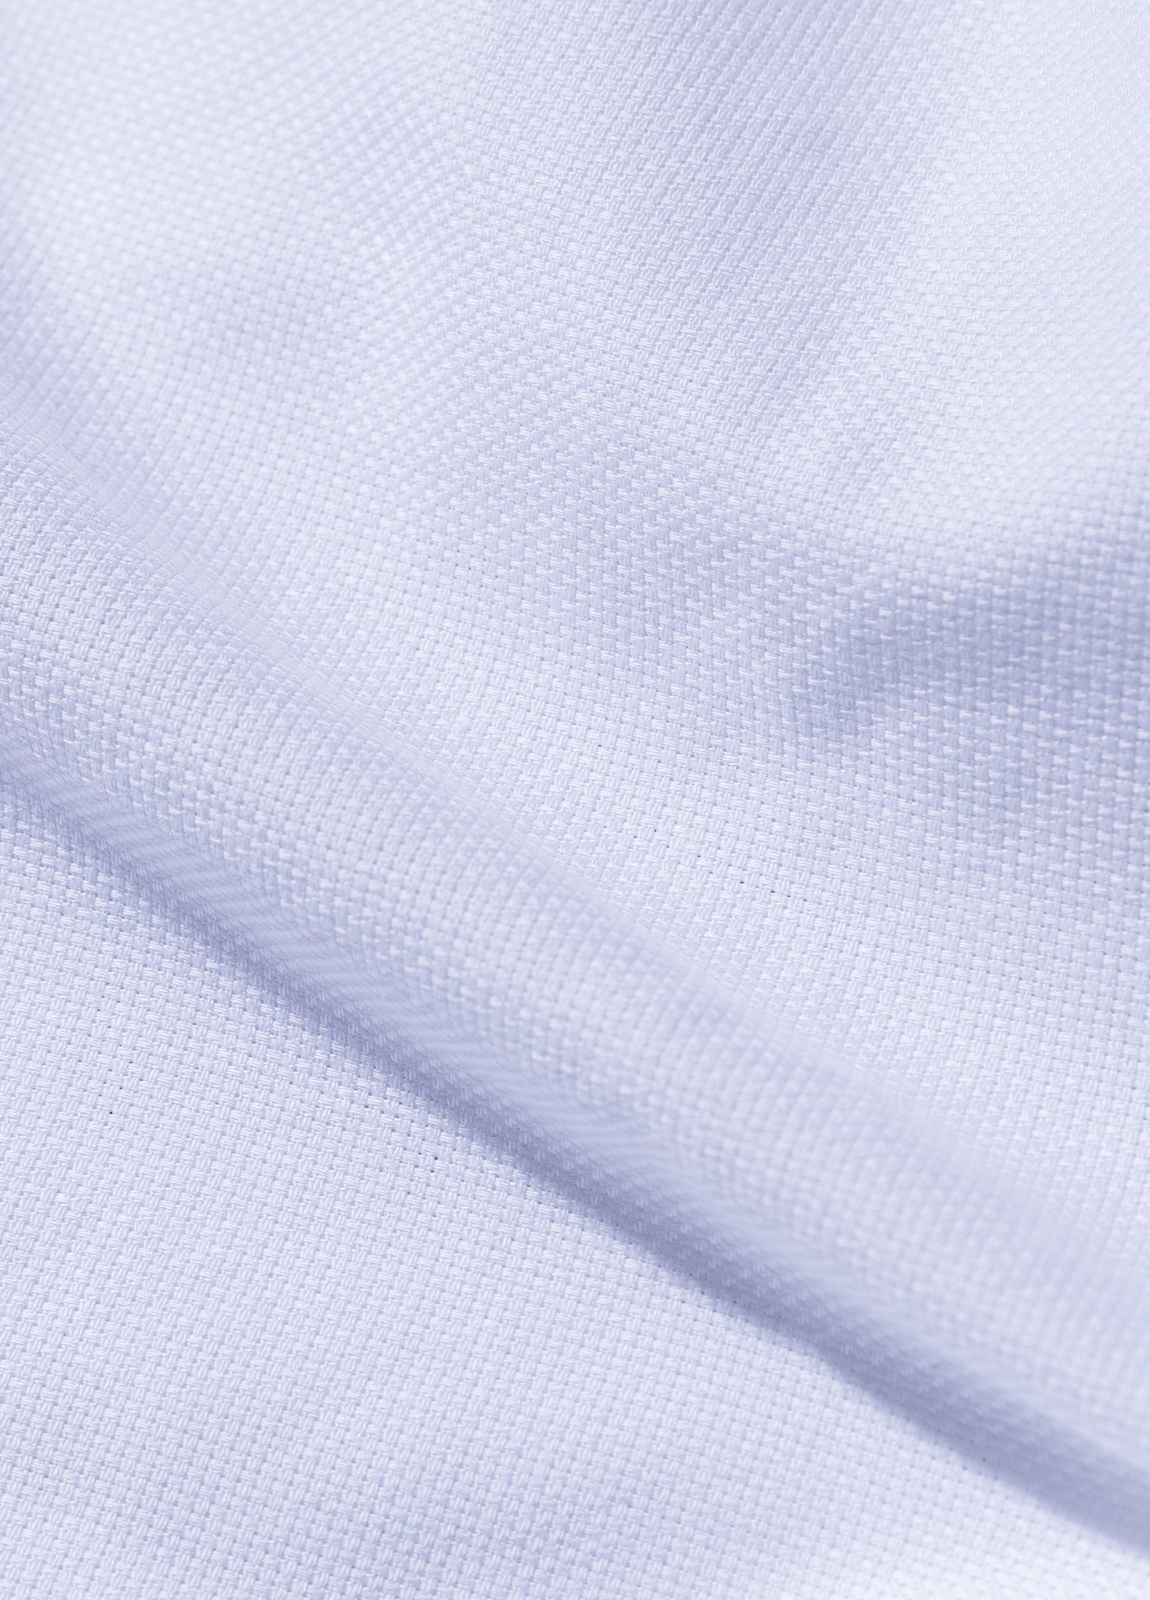 Camisa sport FUREST COLECCION textura blanco - Ítem3